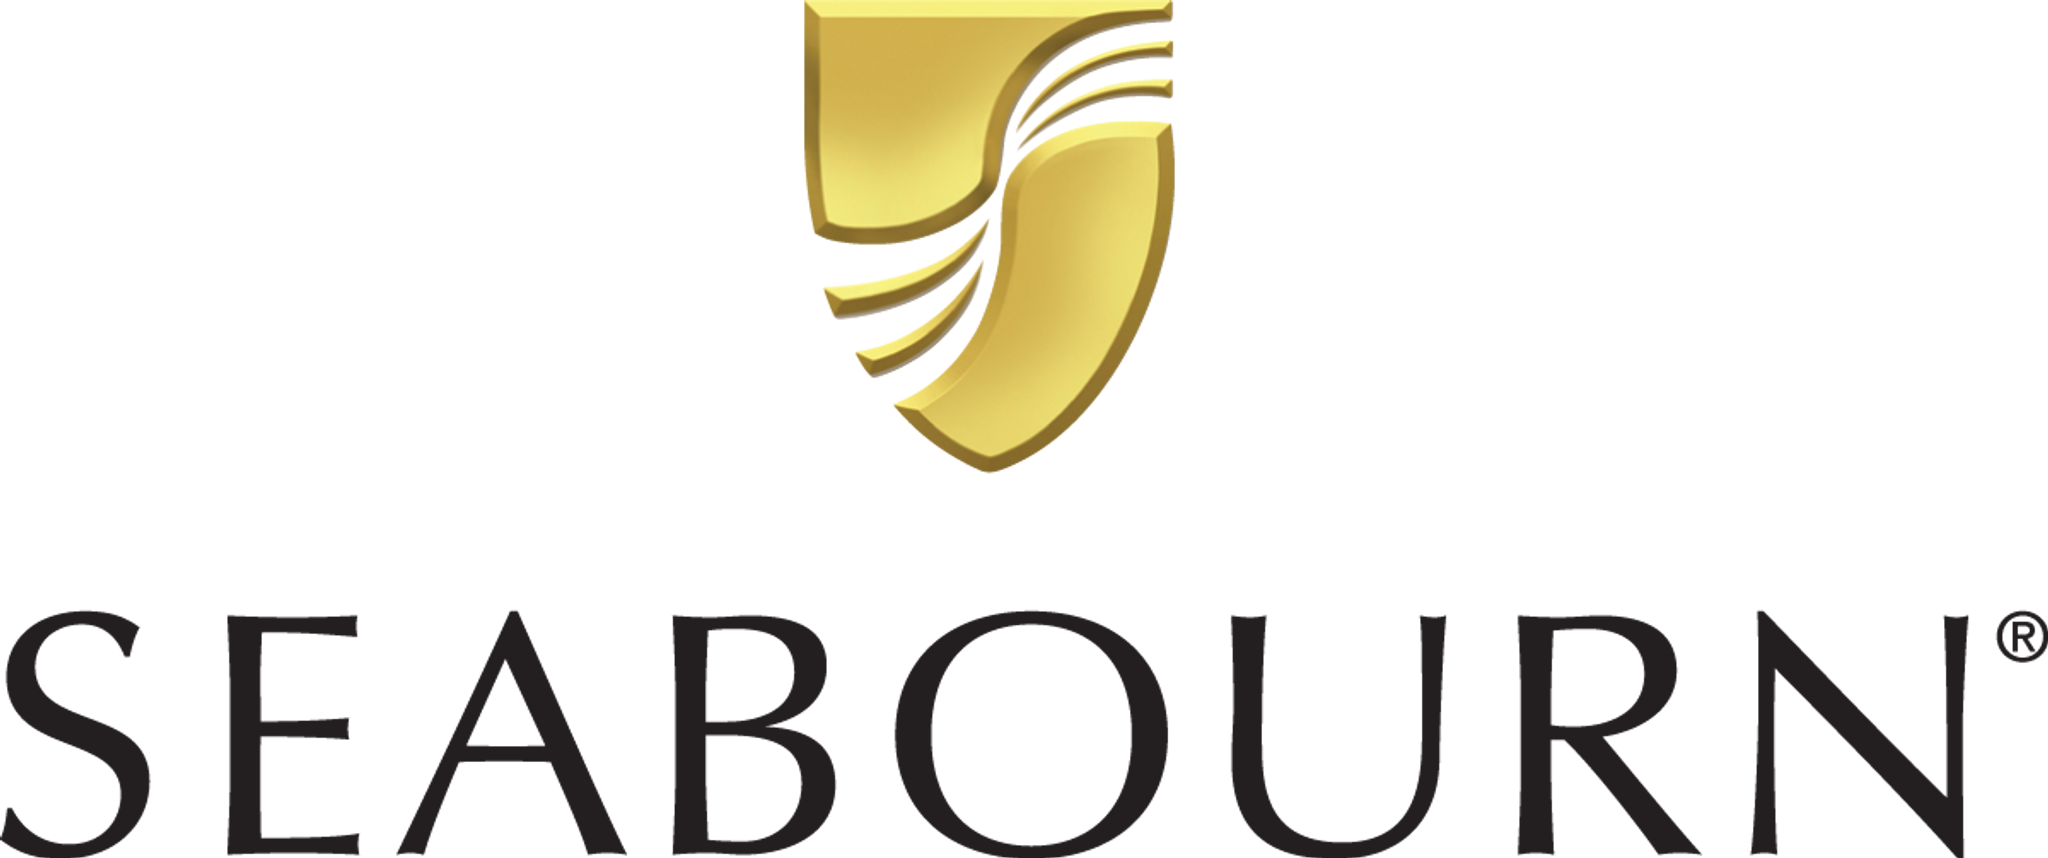 seabourn-logo